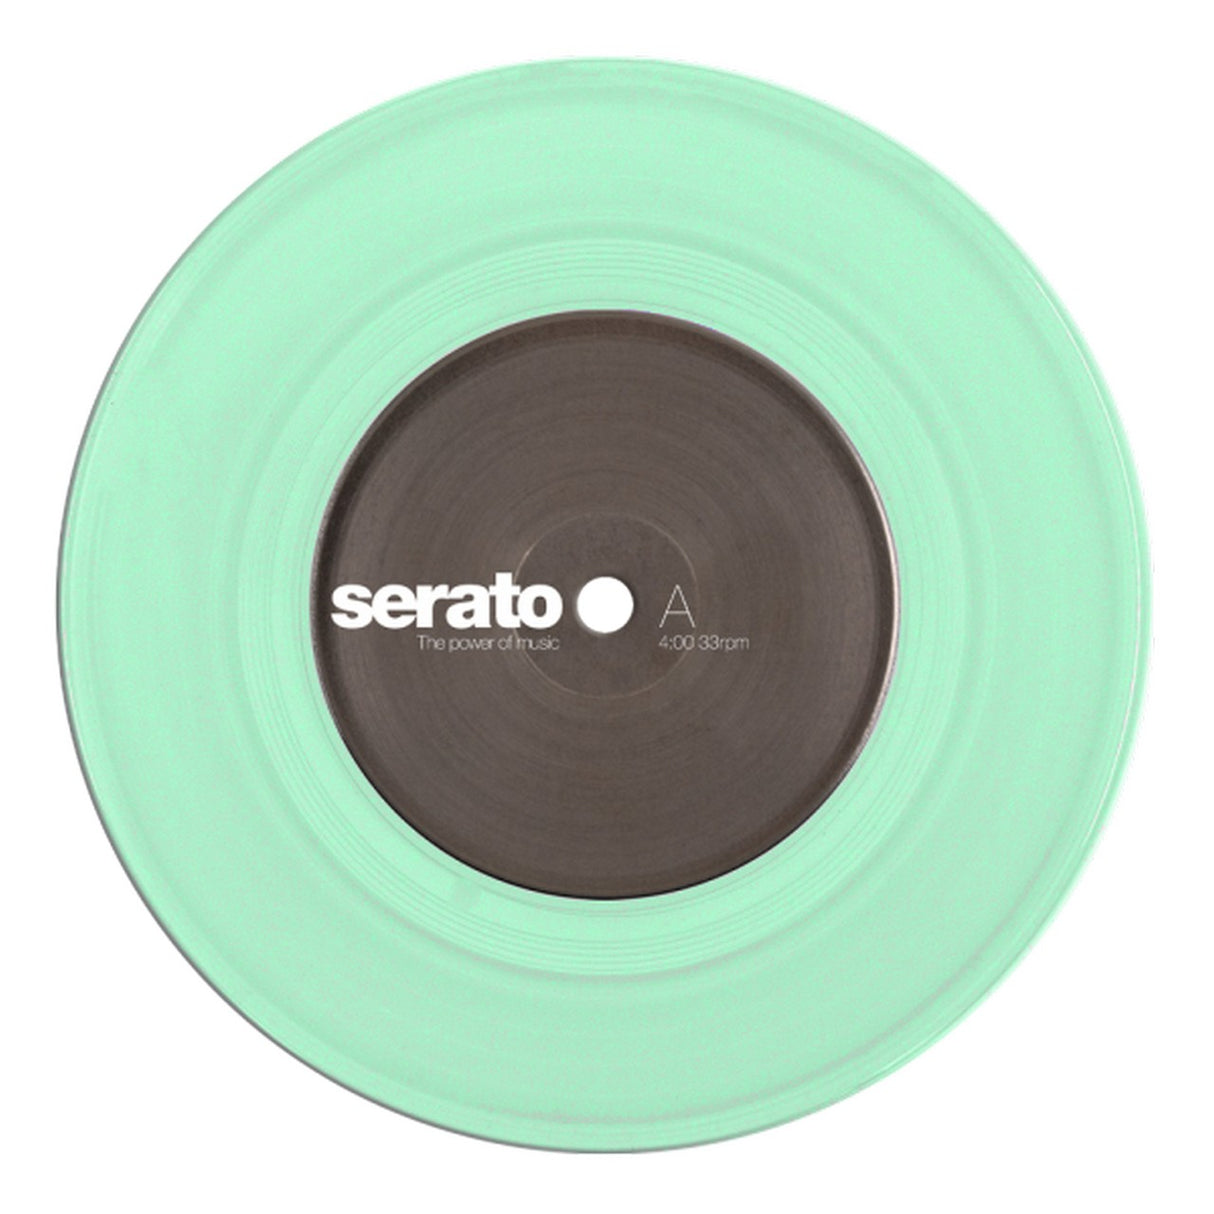 Serato 7-Inch Control Vinyl, Glow in the Dark, Pair